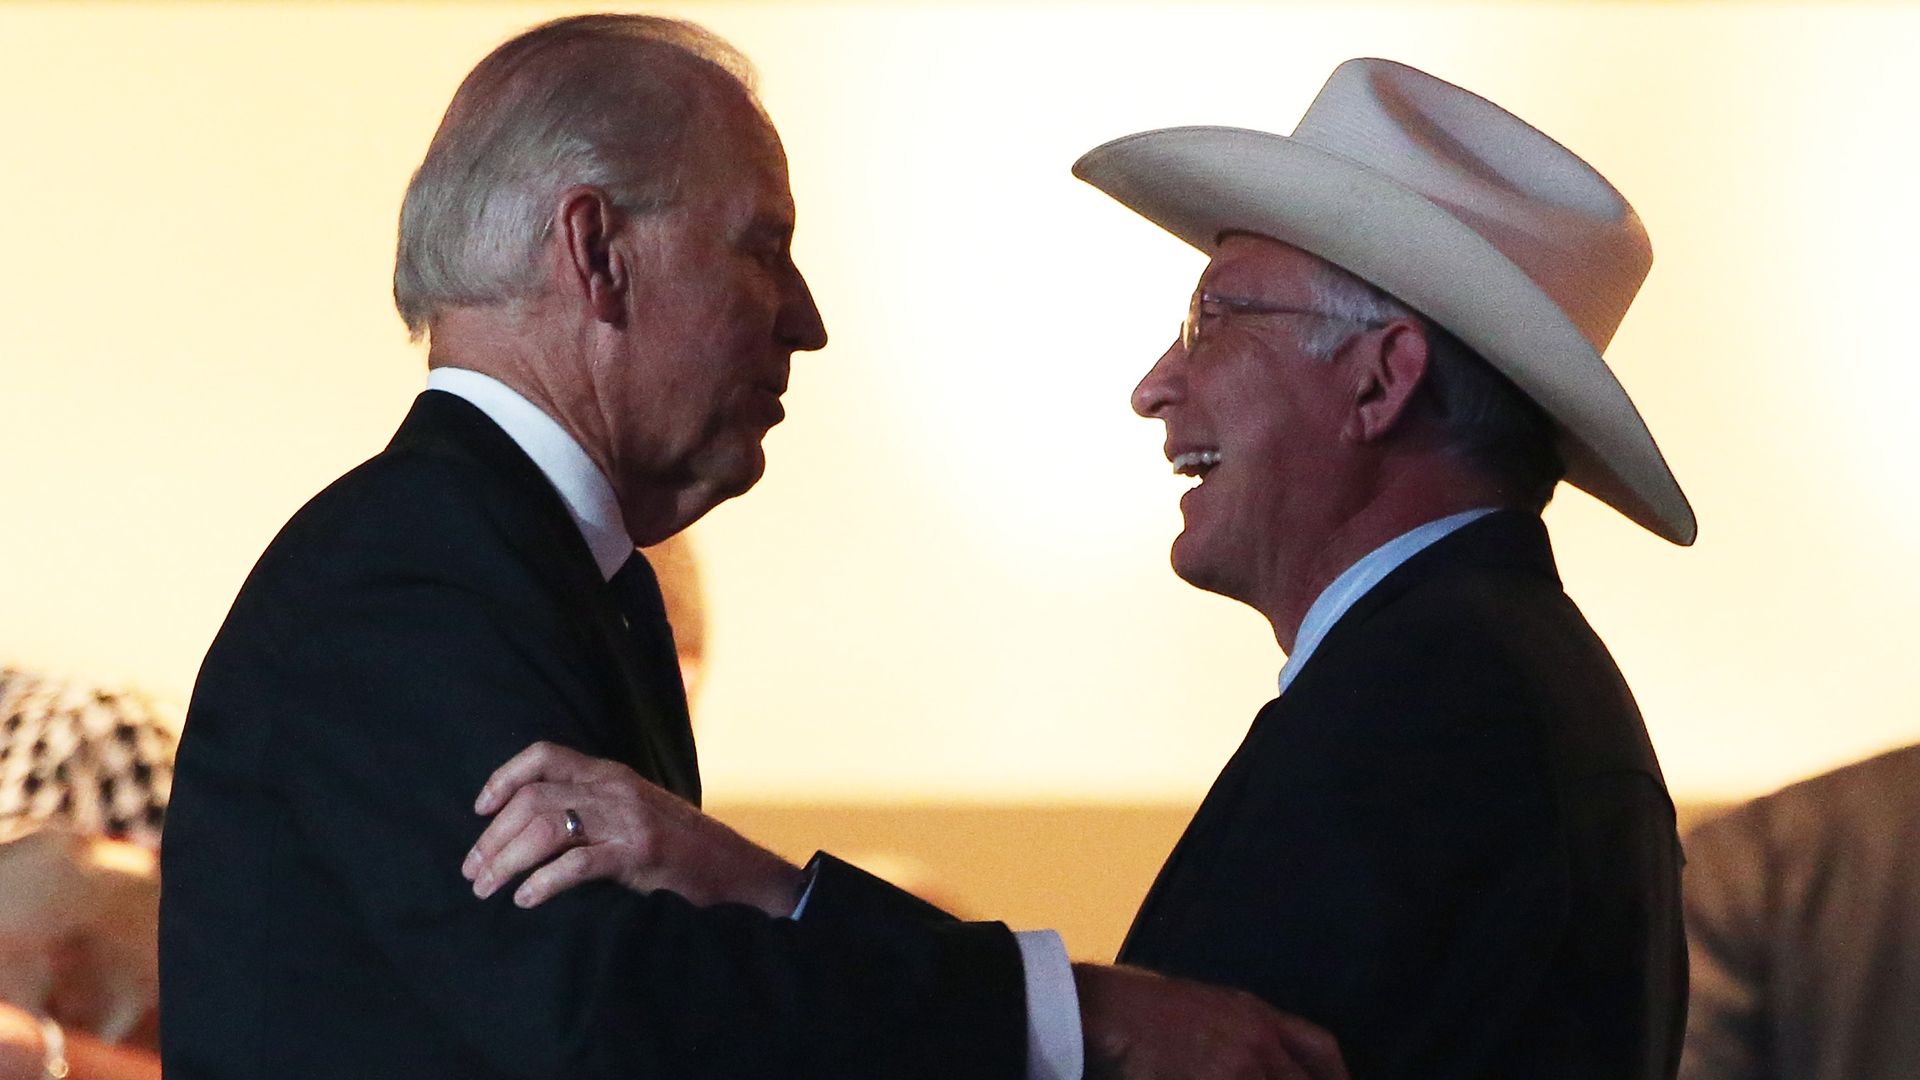 Joe Biden and Ken Salazar are seen embracing at the 2012 Democratic National Convention.